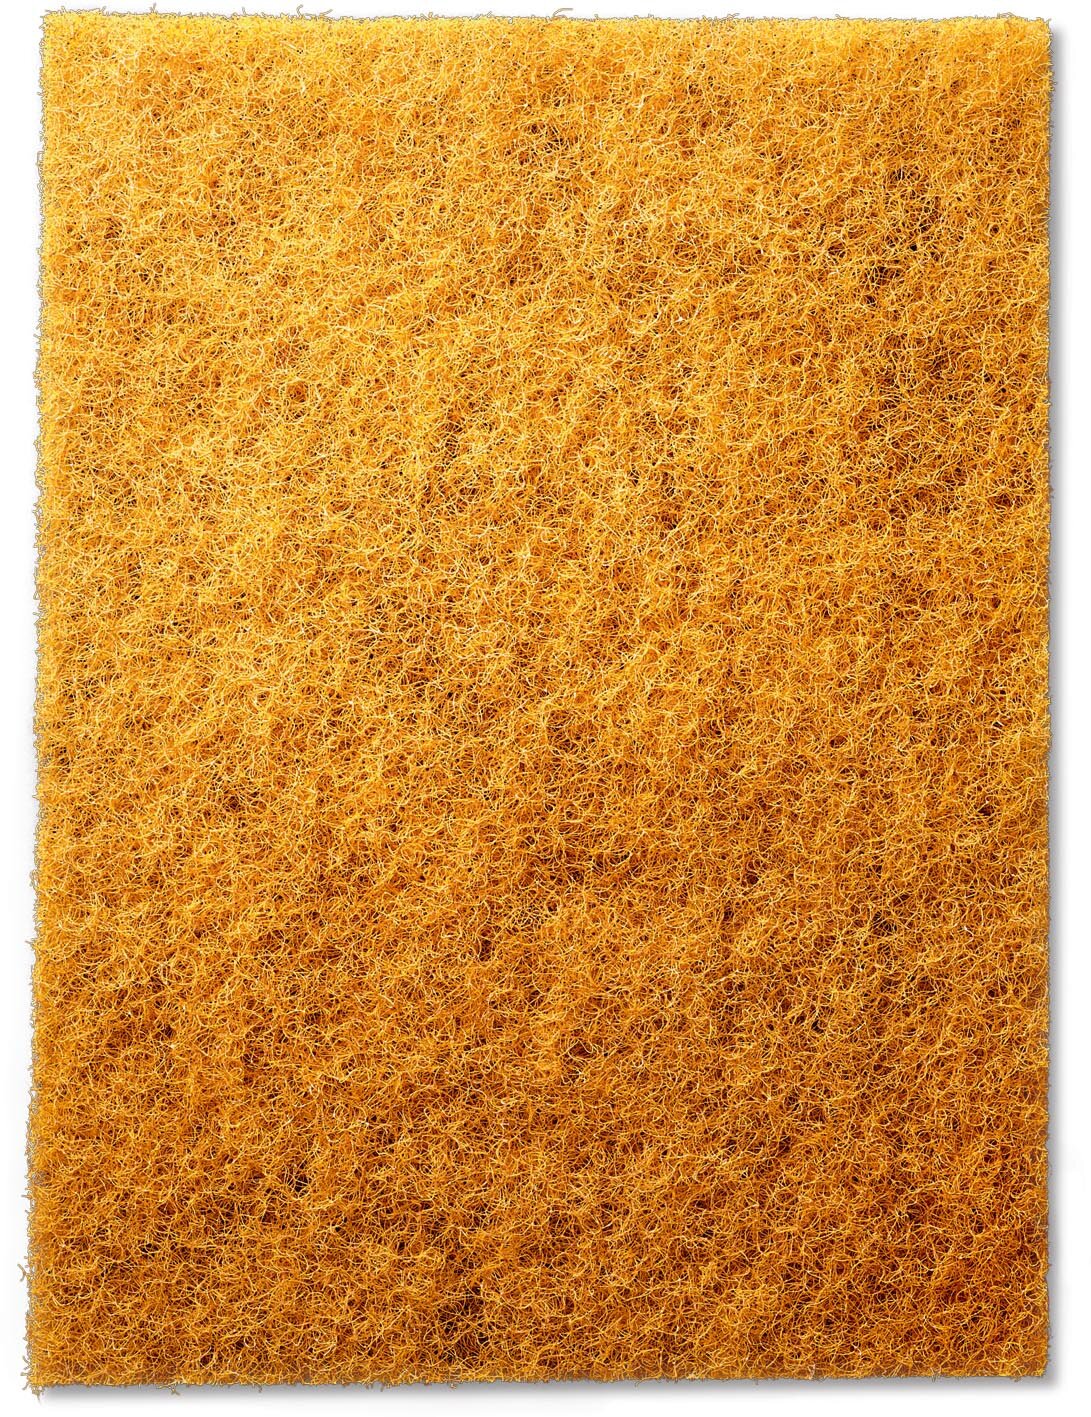 siavlies hand pads sanding strips microfine gold (20 pieces)